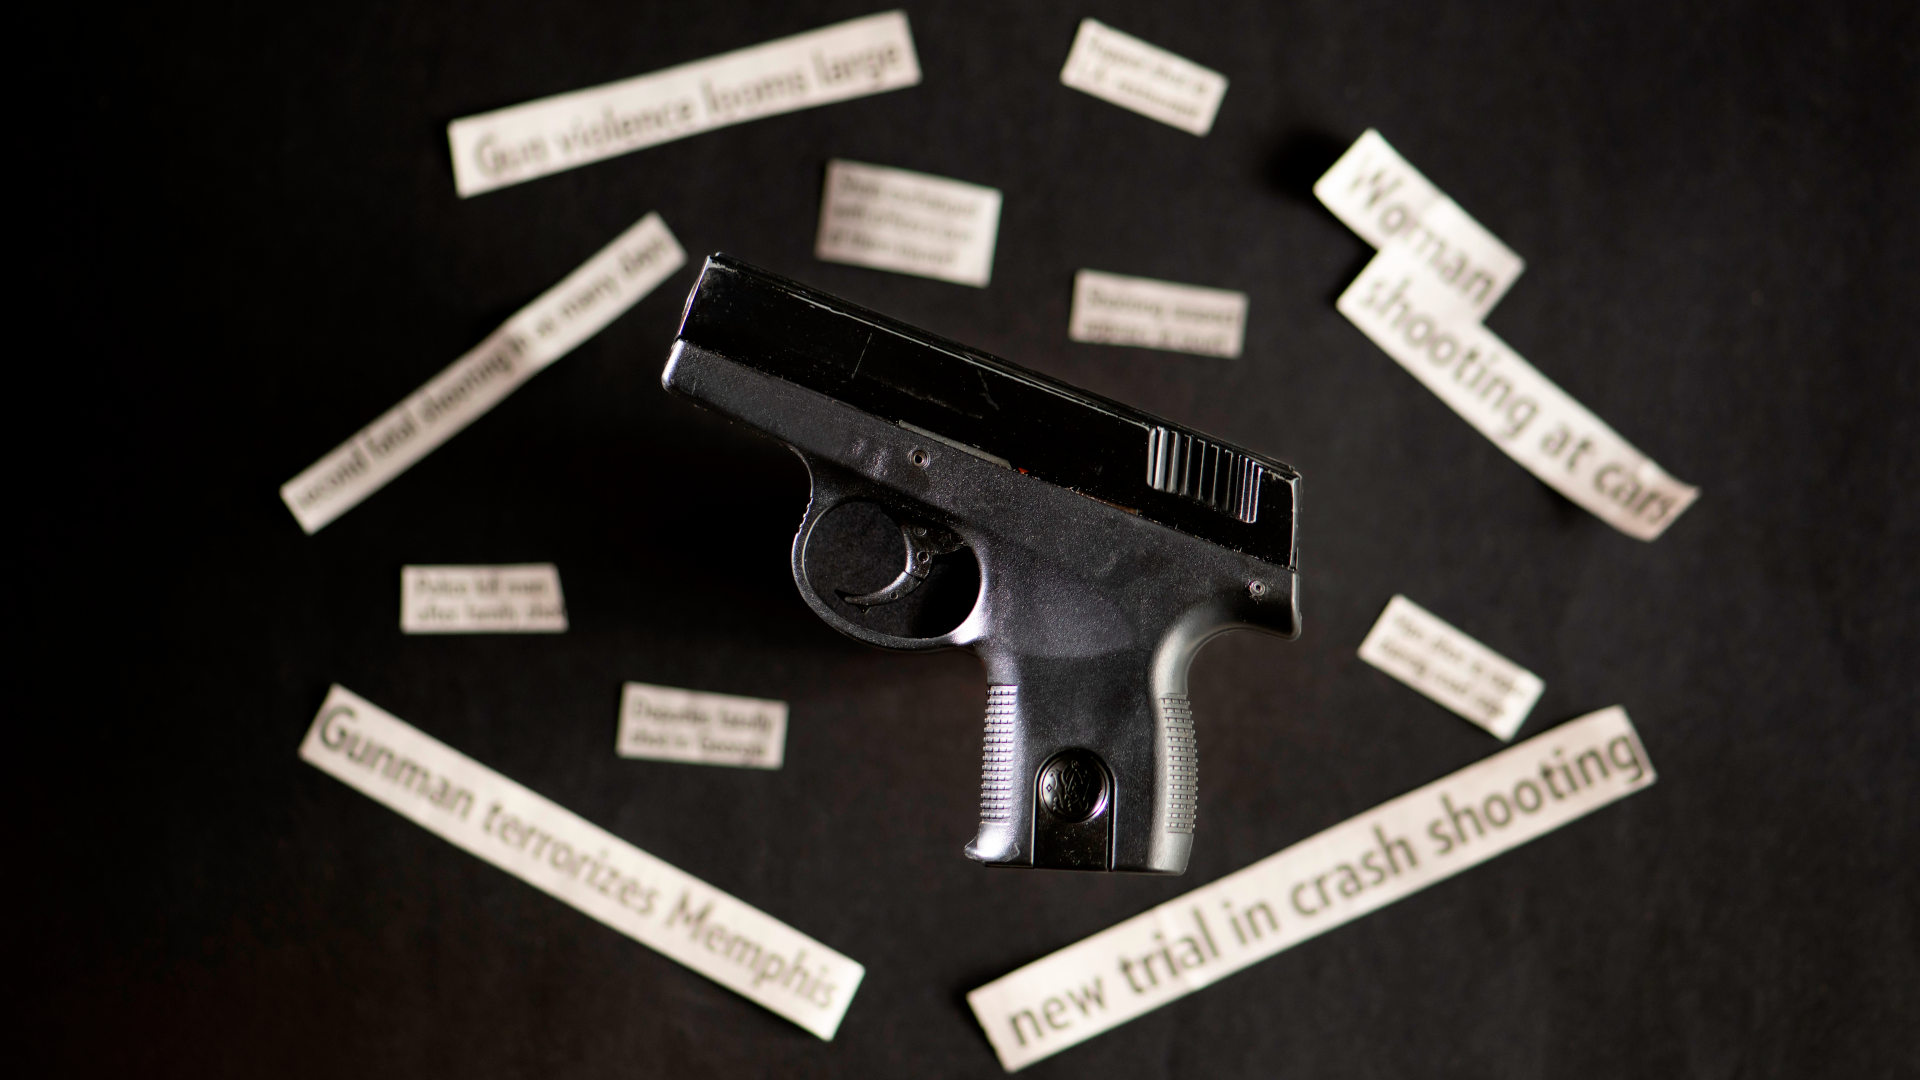 Handgun with out of focus gun violence newspaper headlines.